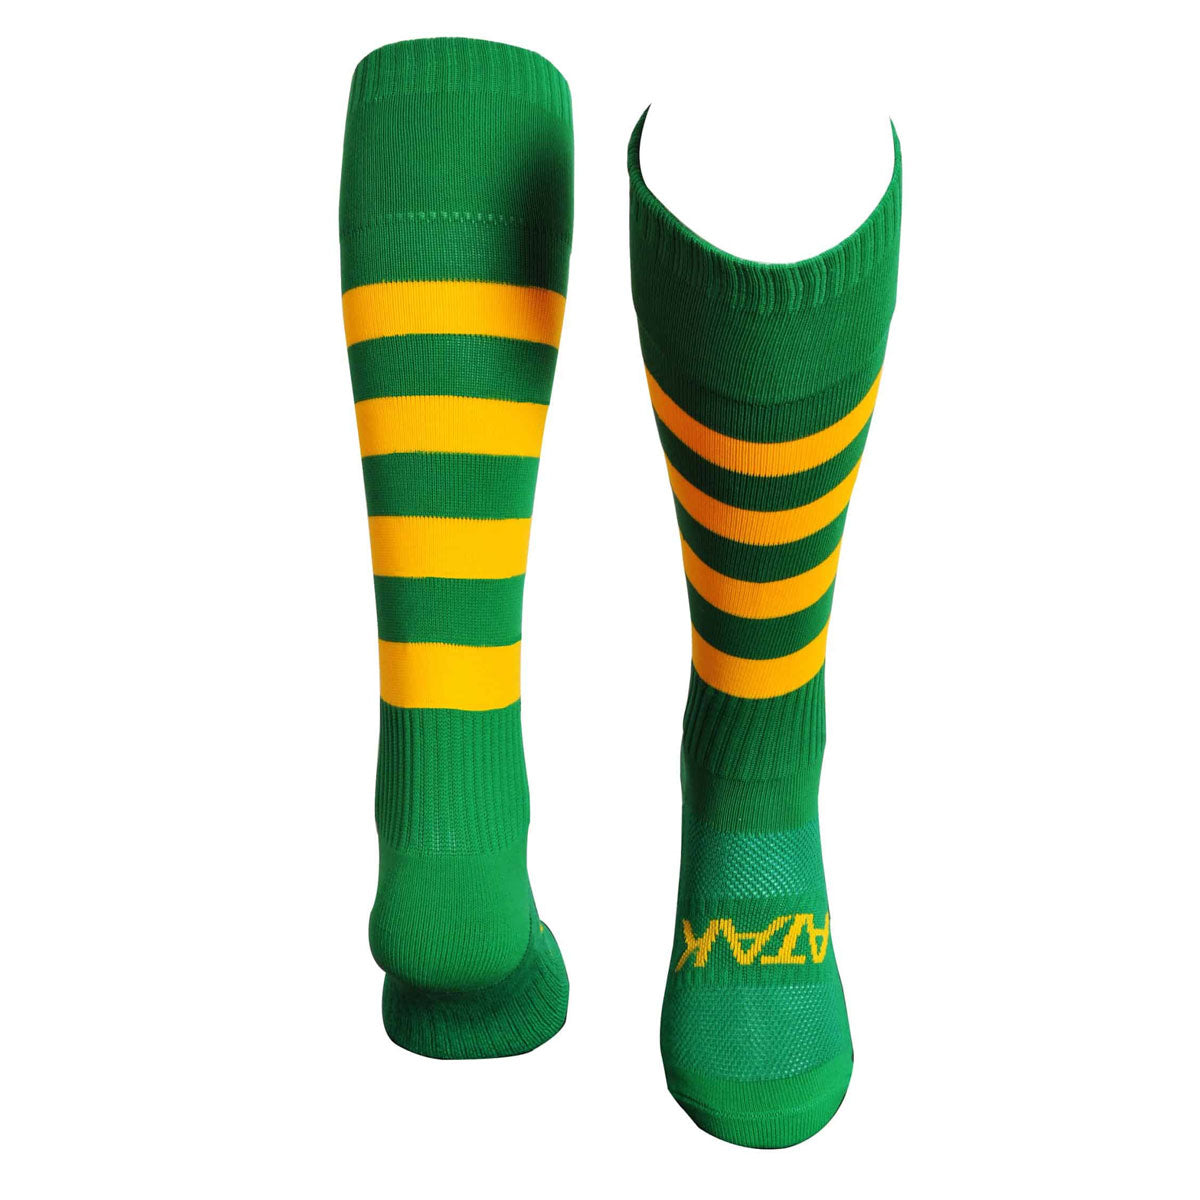 Atak Hooped Sports Socks - Adult - Green/Gold